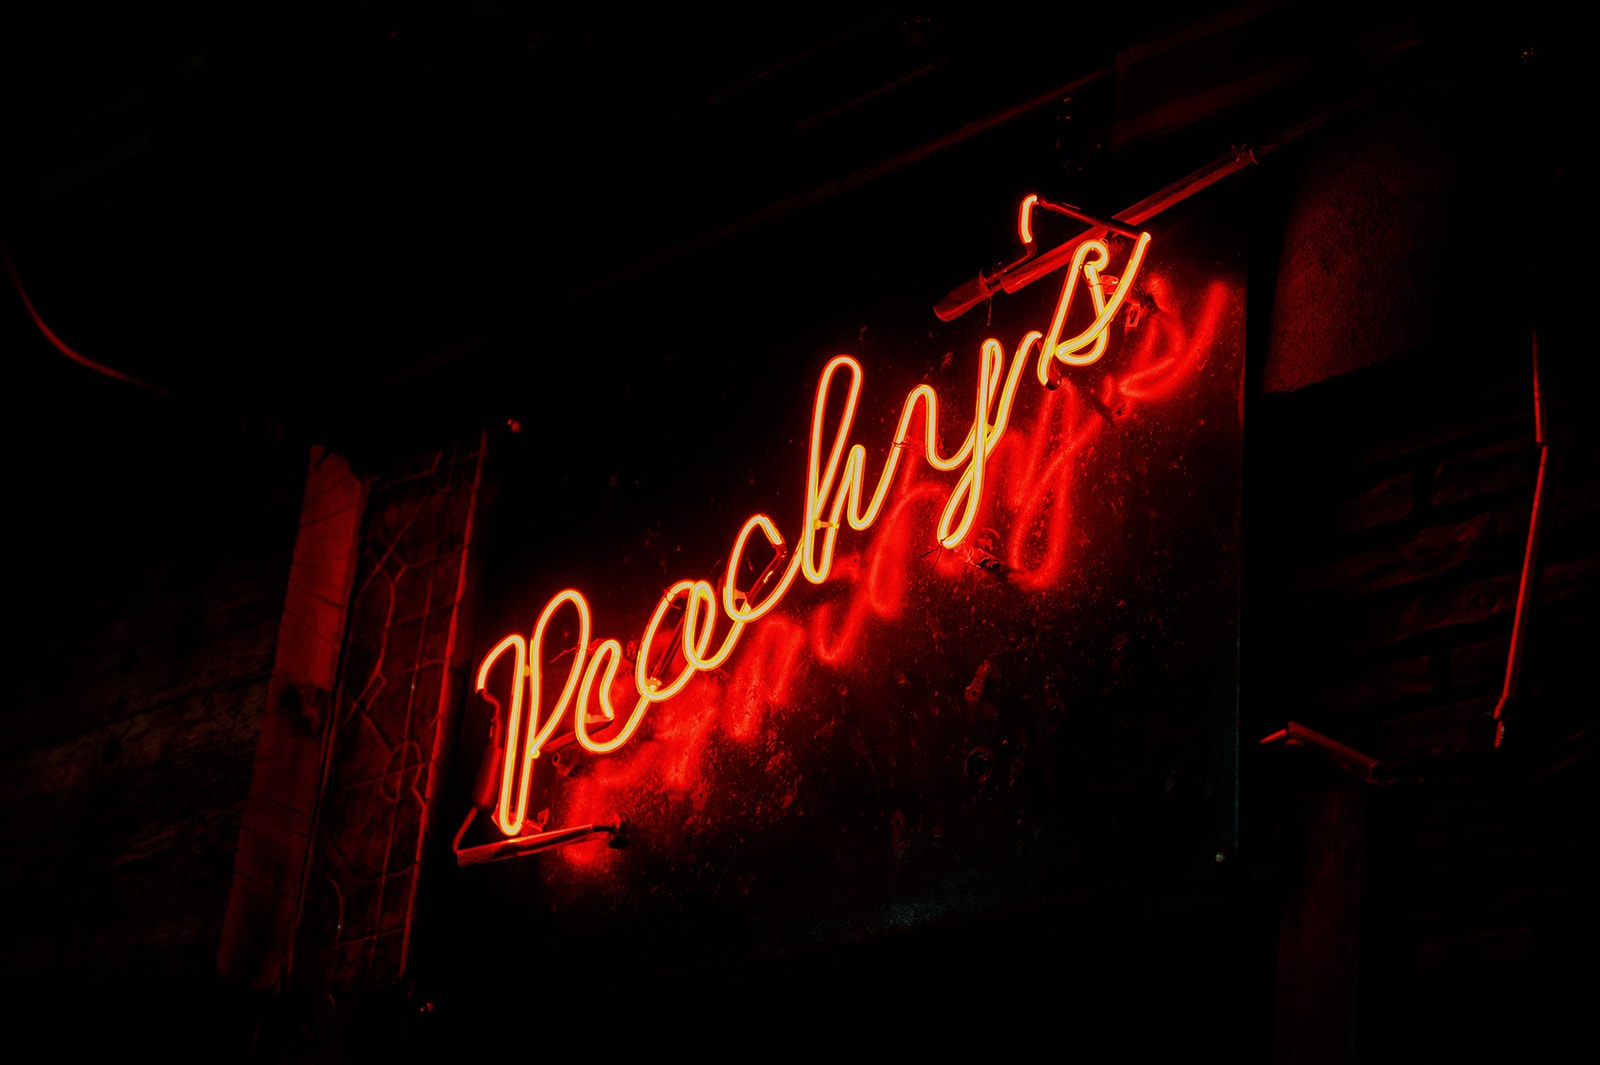 Peachy's neon sign Chinatown, NYC.